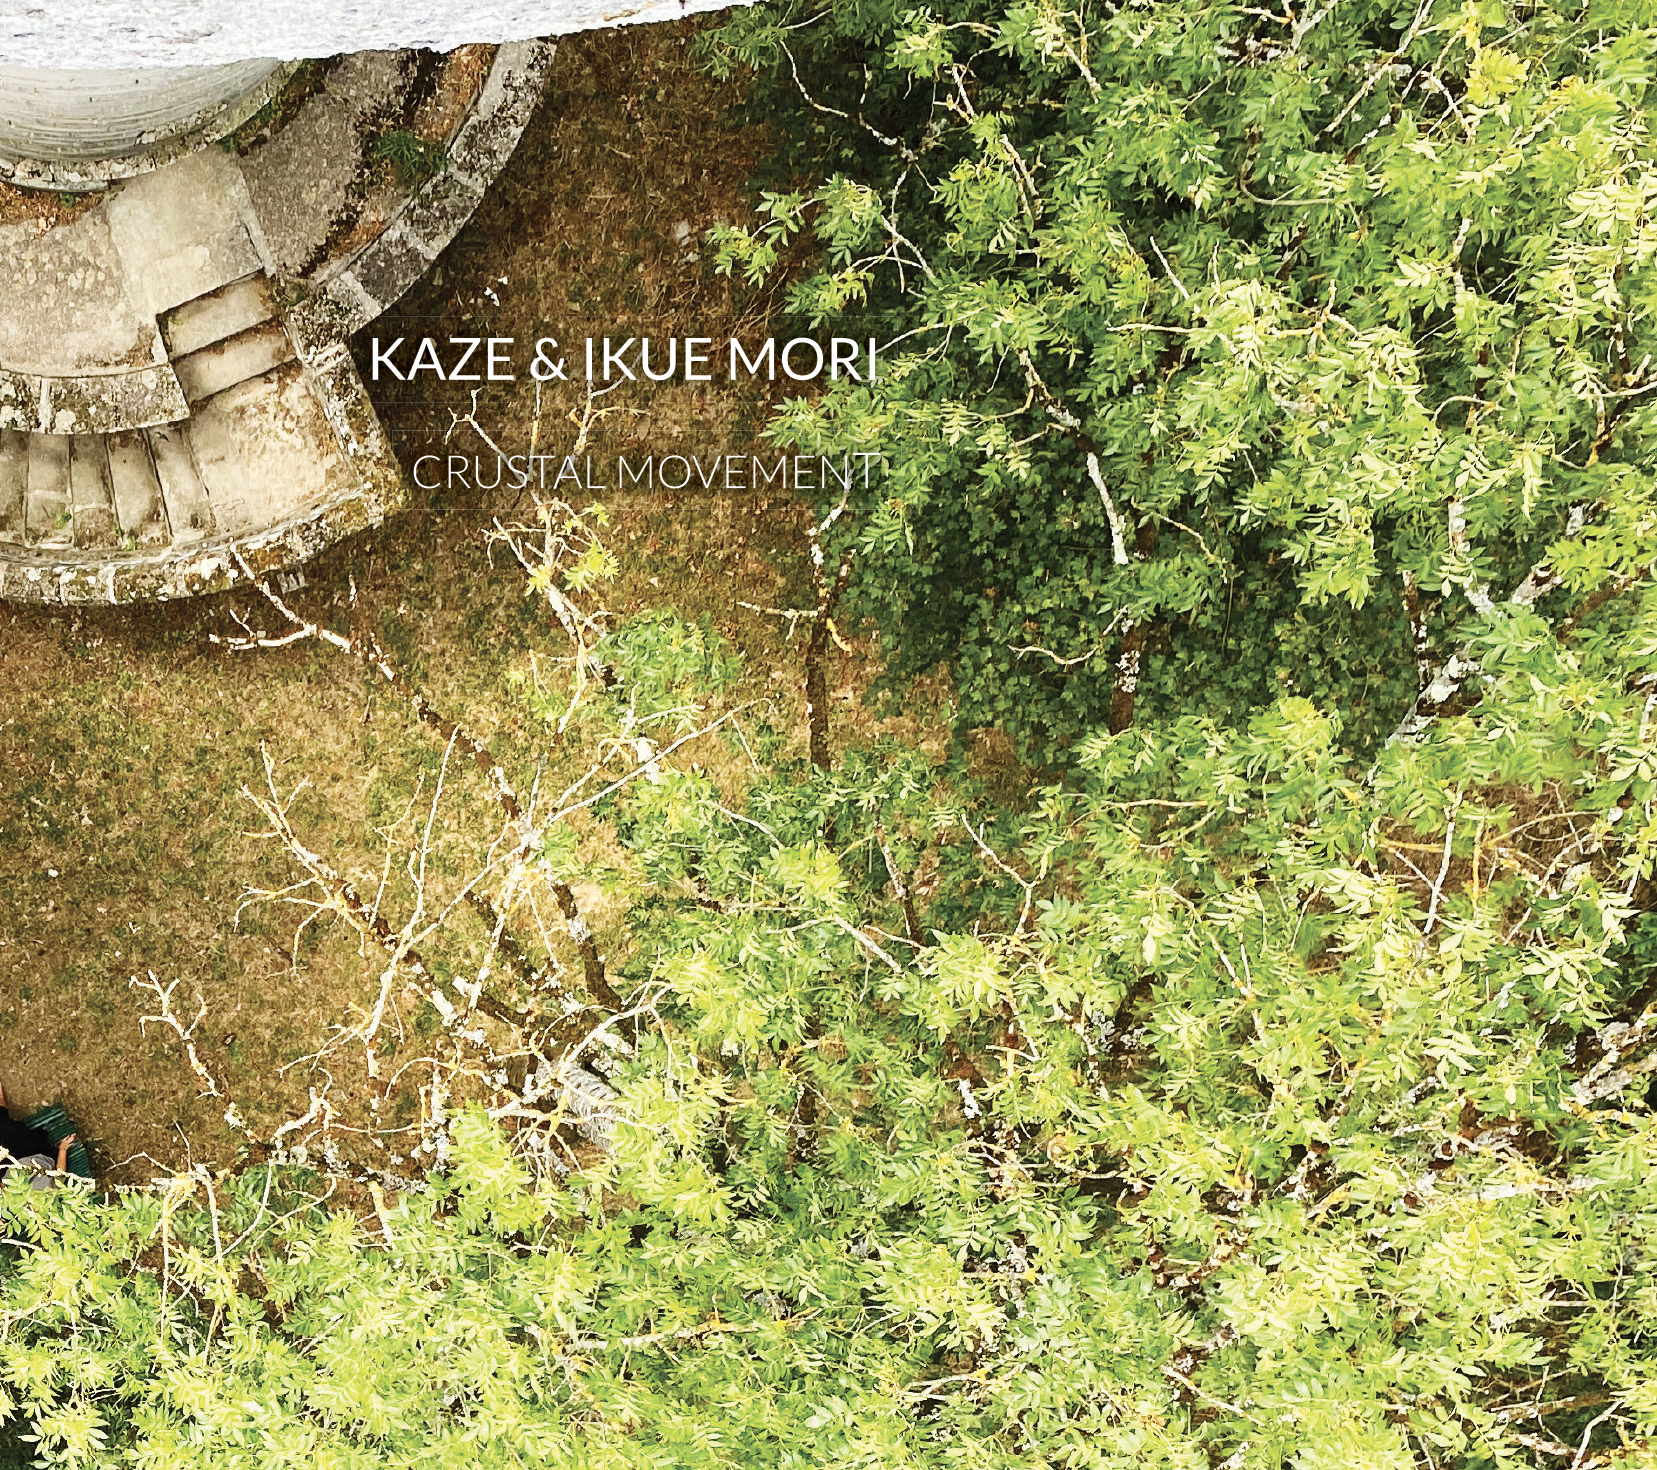 Kaze Ikue Mori Crustal Movement